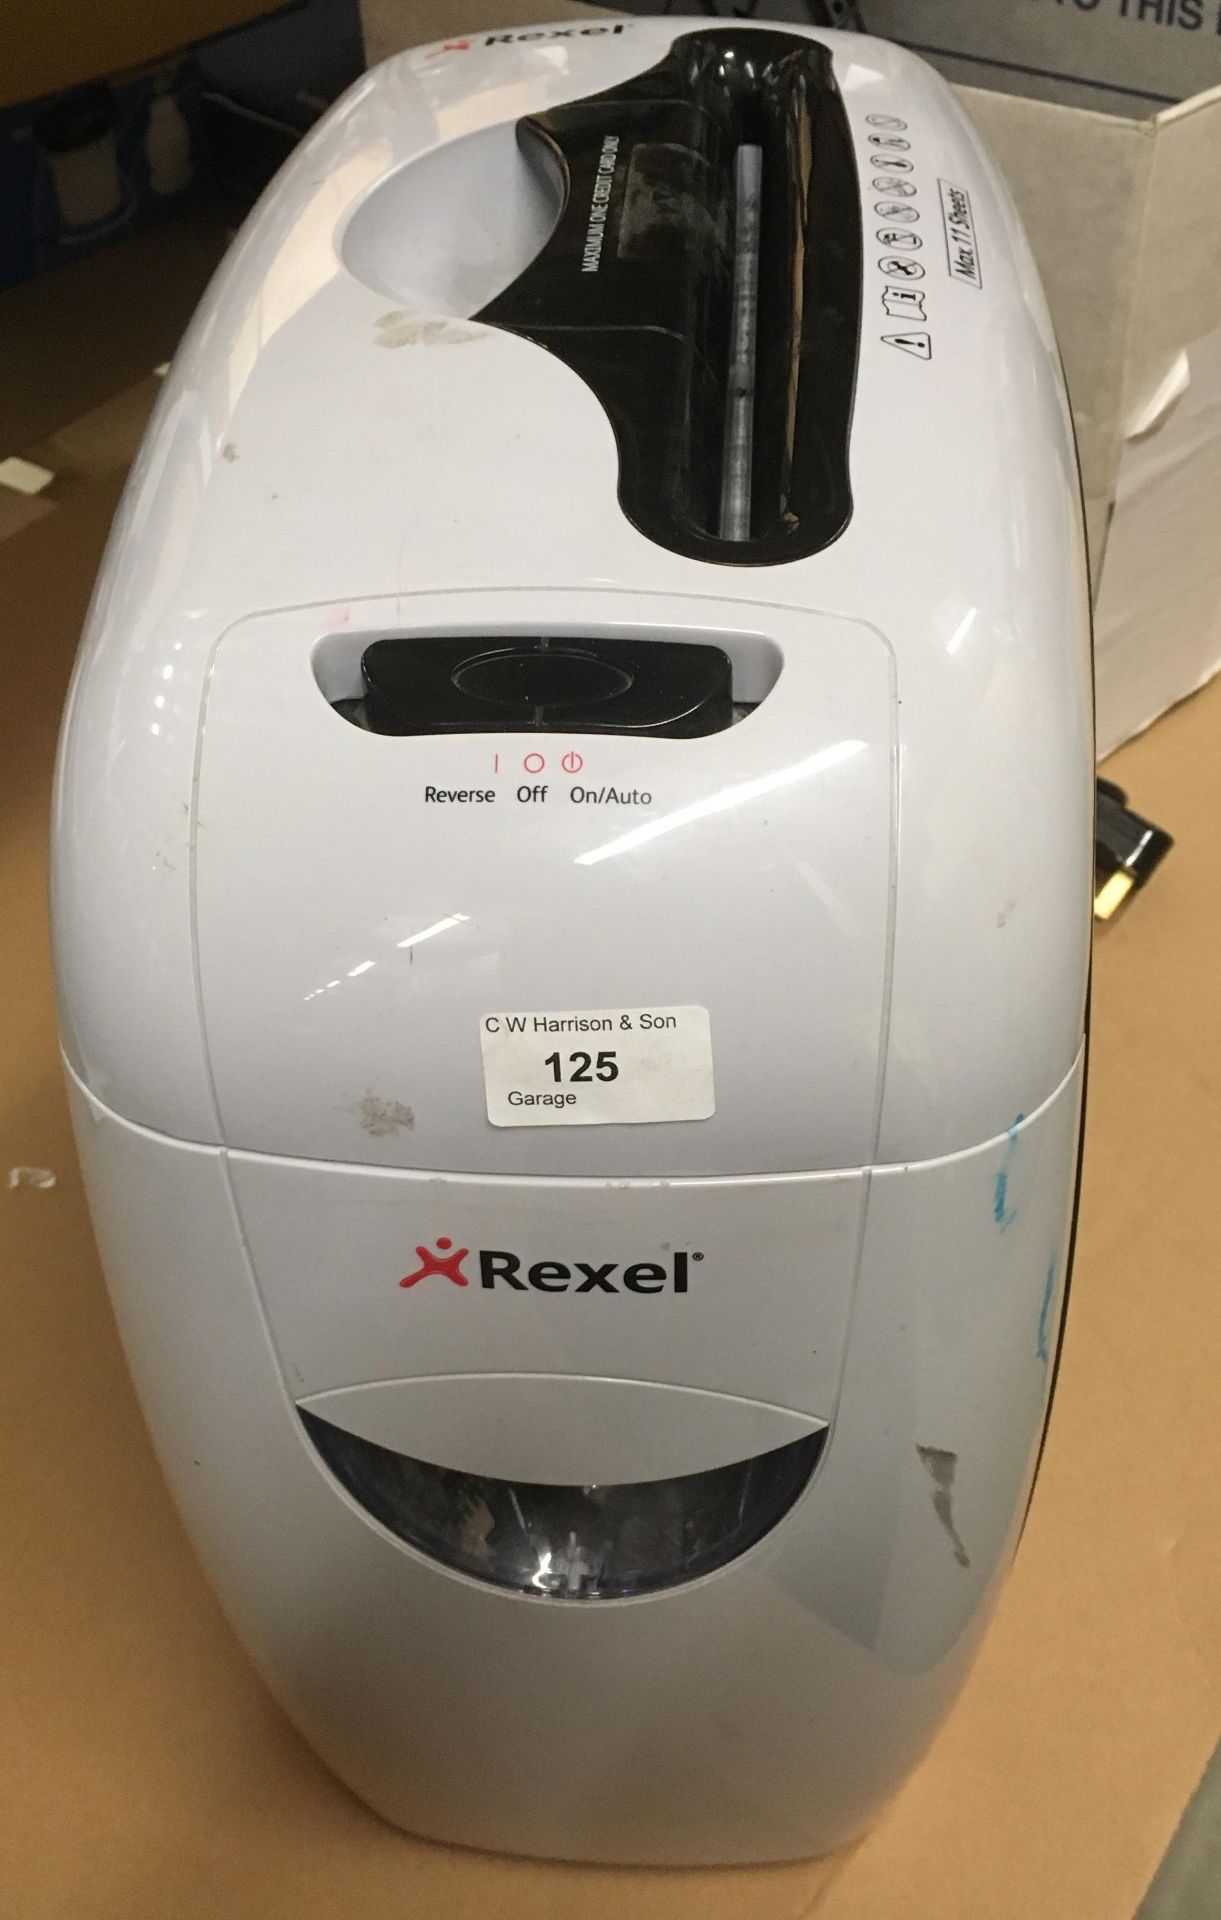 A Rexel Prostyle 240v paper shredder